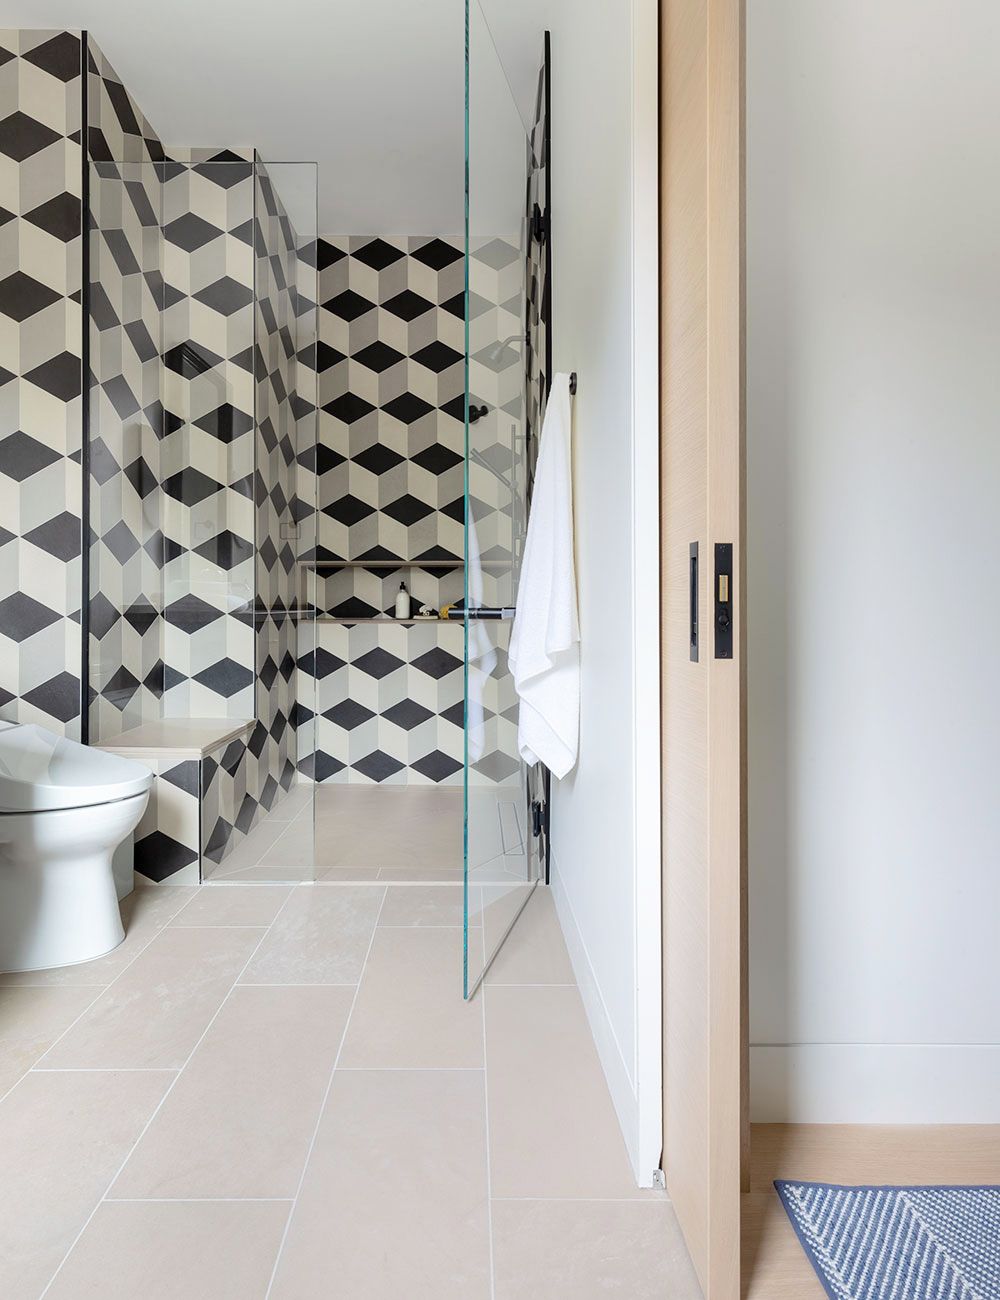 48 Bathroom Tile Ideas Bath, Tile Designs For Bathrooms